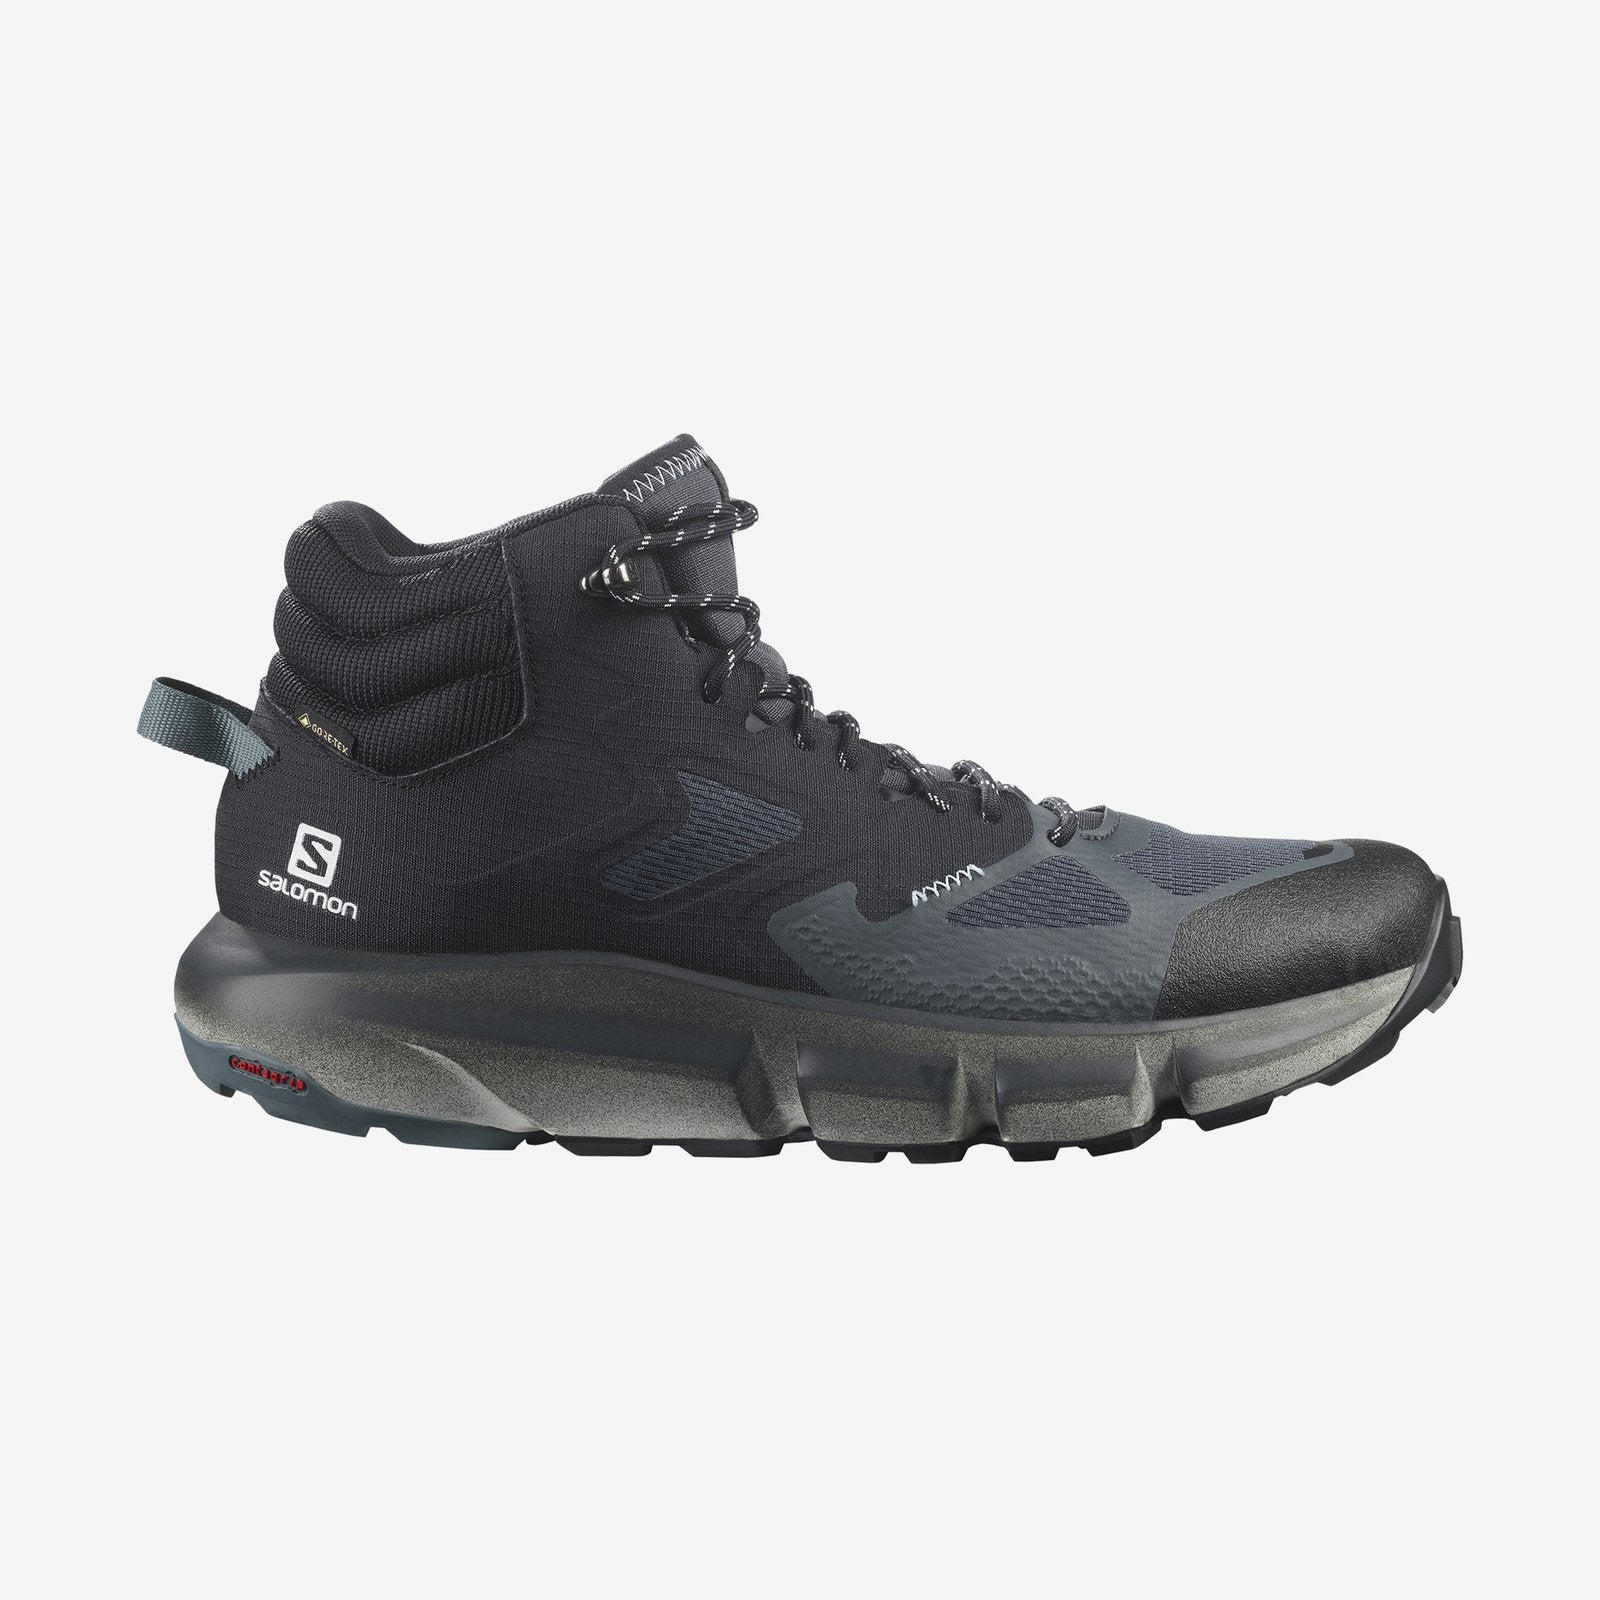 Salomon Predict Hike Mid GTX Hiking Boots (Men's) - Ebony/Black/Stormy Weather - Find Your Feet Australia Hobart Launceston Tasmania